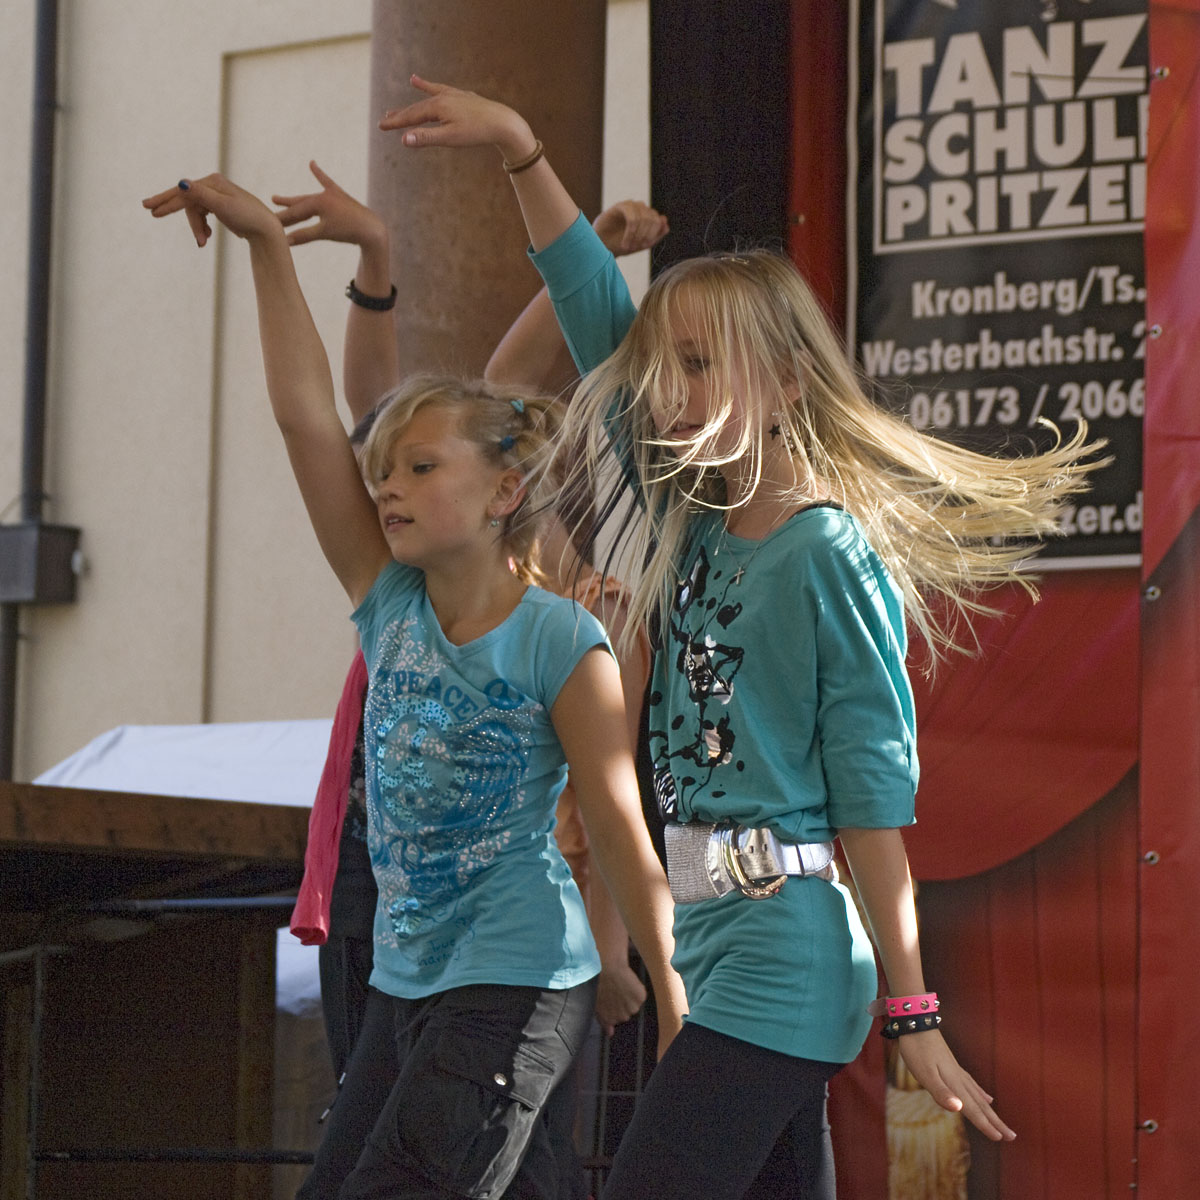 Kronberger Herbstmarkt 2009 - Tanzschule Pritzer